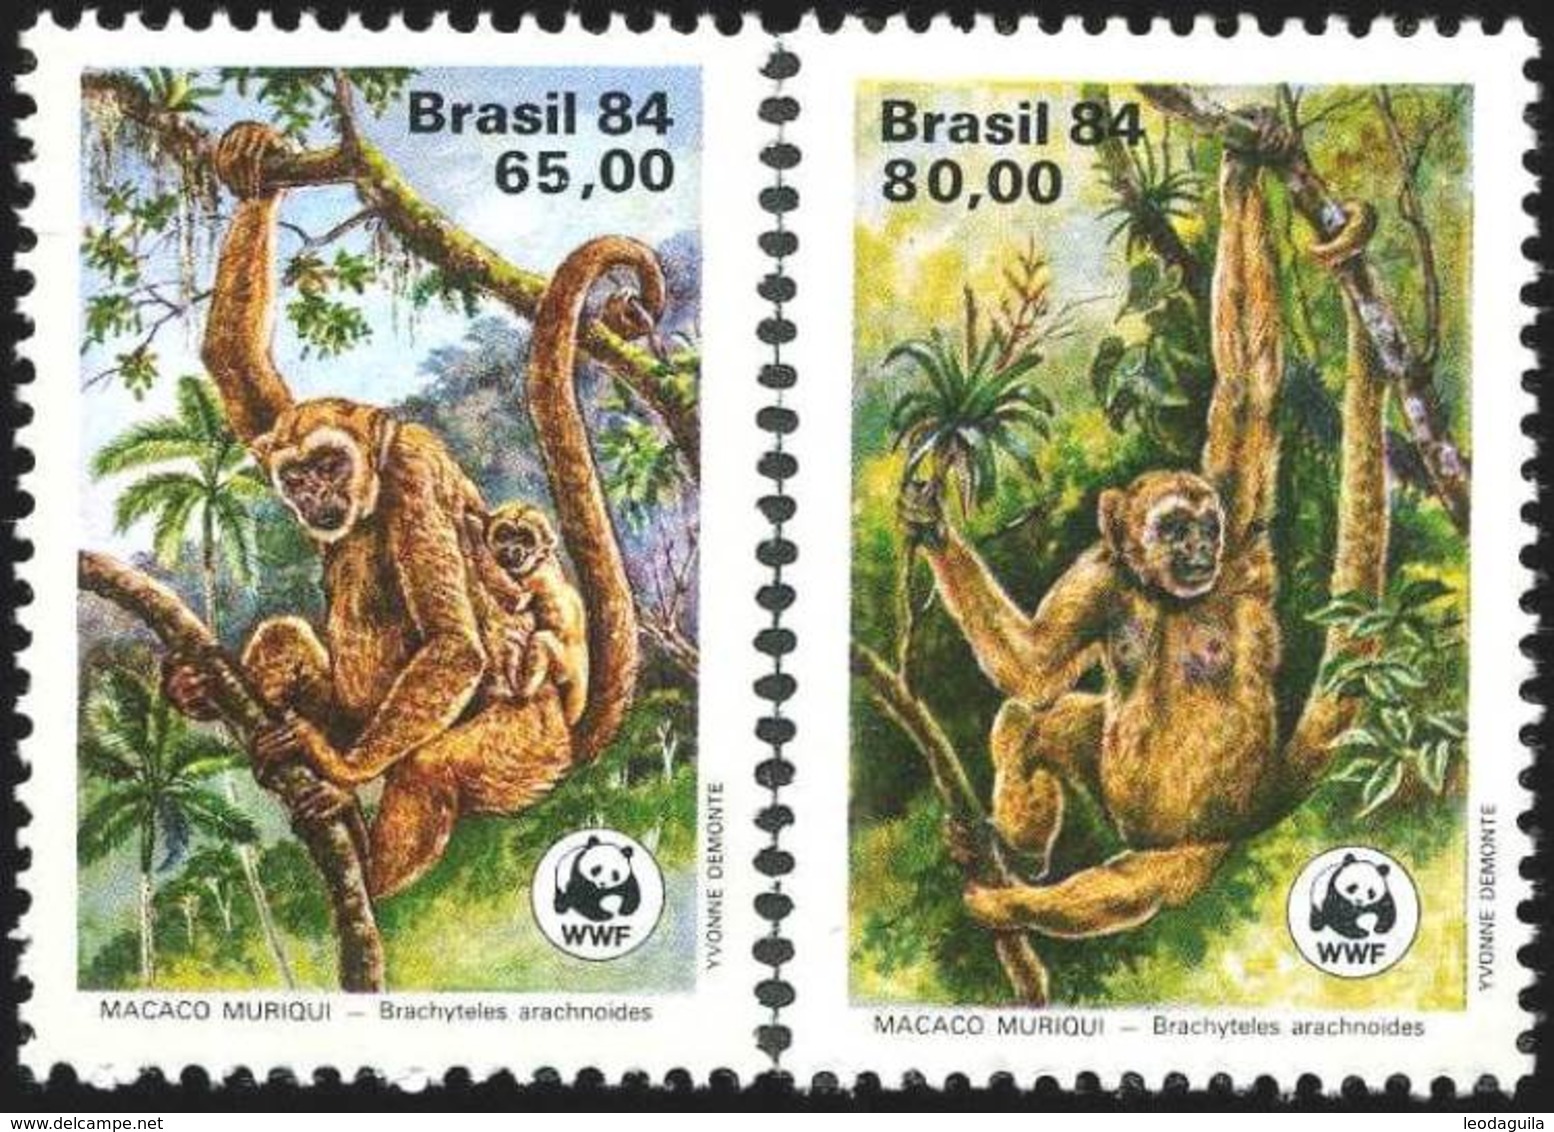 BRAZIL #1926-7   MONKEY MURIQUI  - WWF - MINT - Unused Stamps